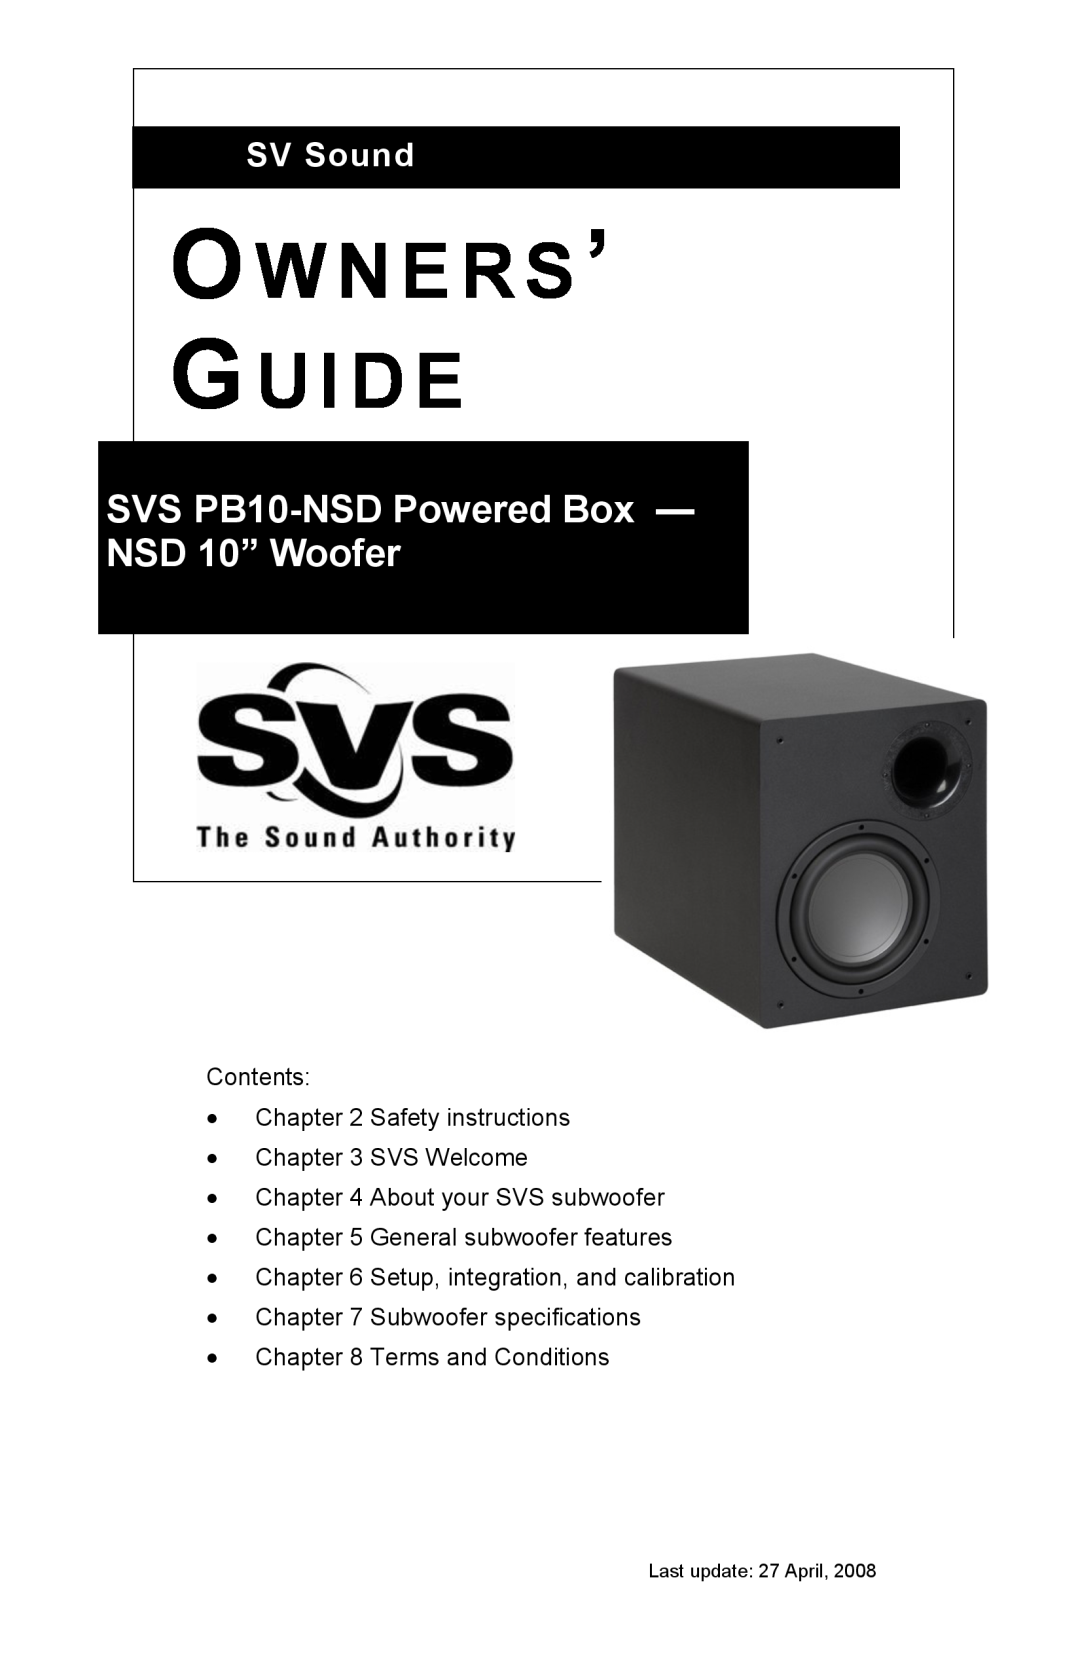 SV Sound specifications O W N E R S ’ G U I D E, SVS PB10-NSDPowered Box - NSD 10” Woofer, SV Sound 